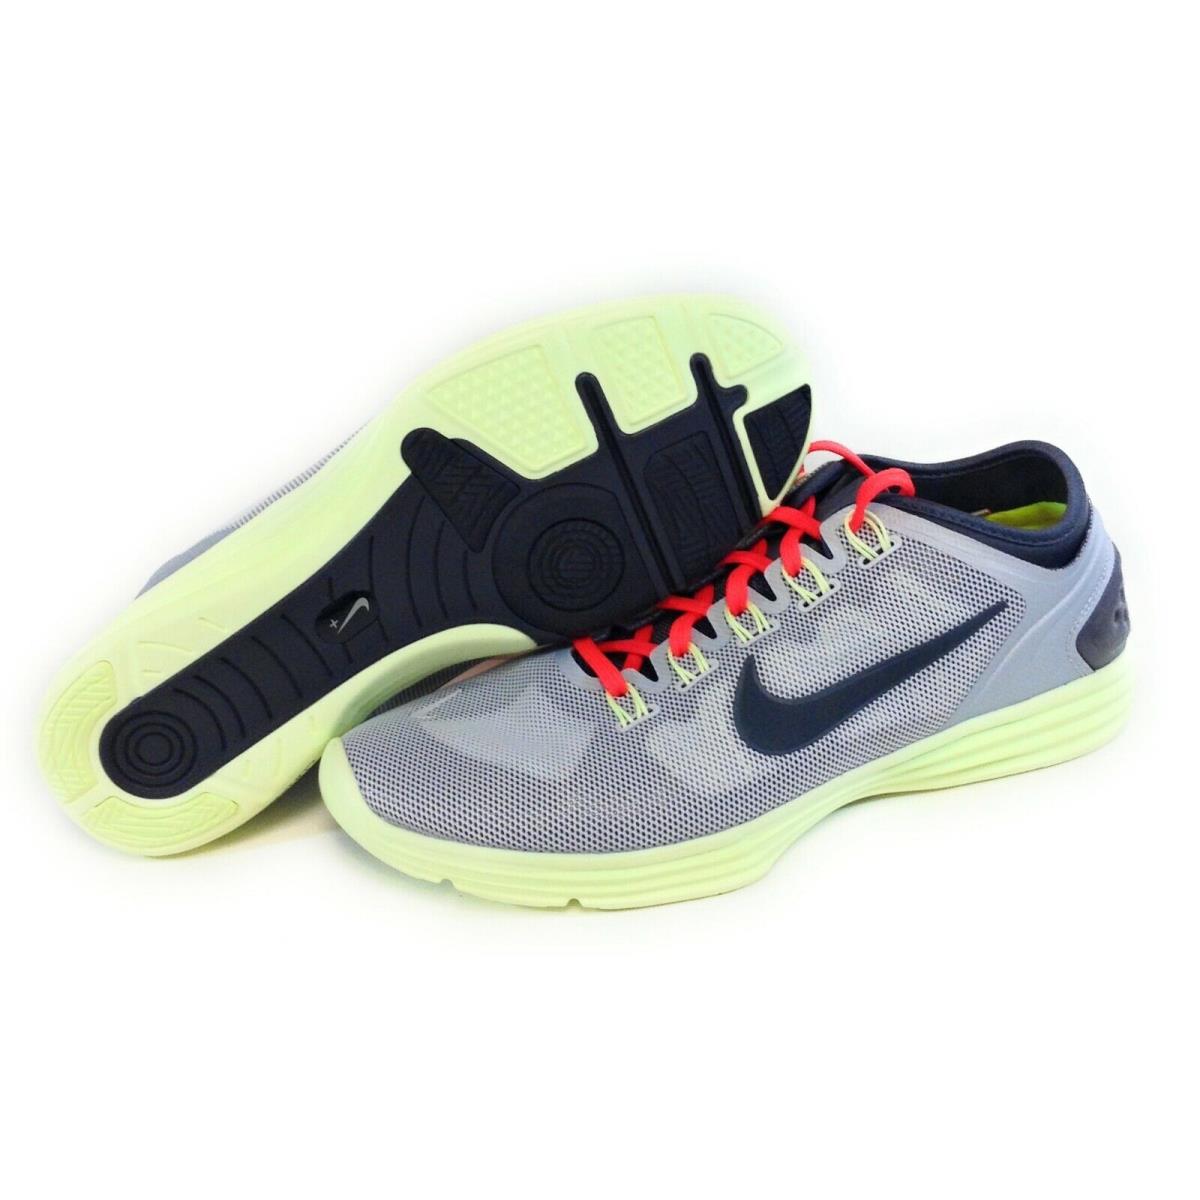 Womens Nike Lunarhyperworkout + 598395 003 Platinum Grey 2012 DS Sneakers Shoes